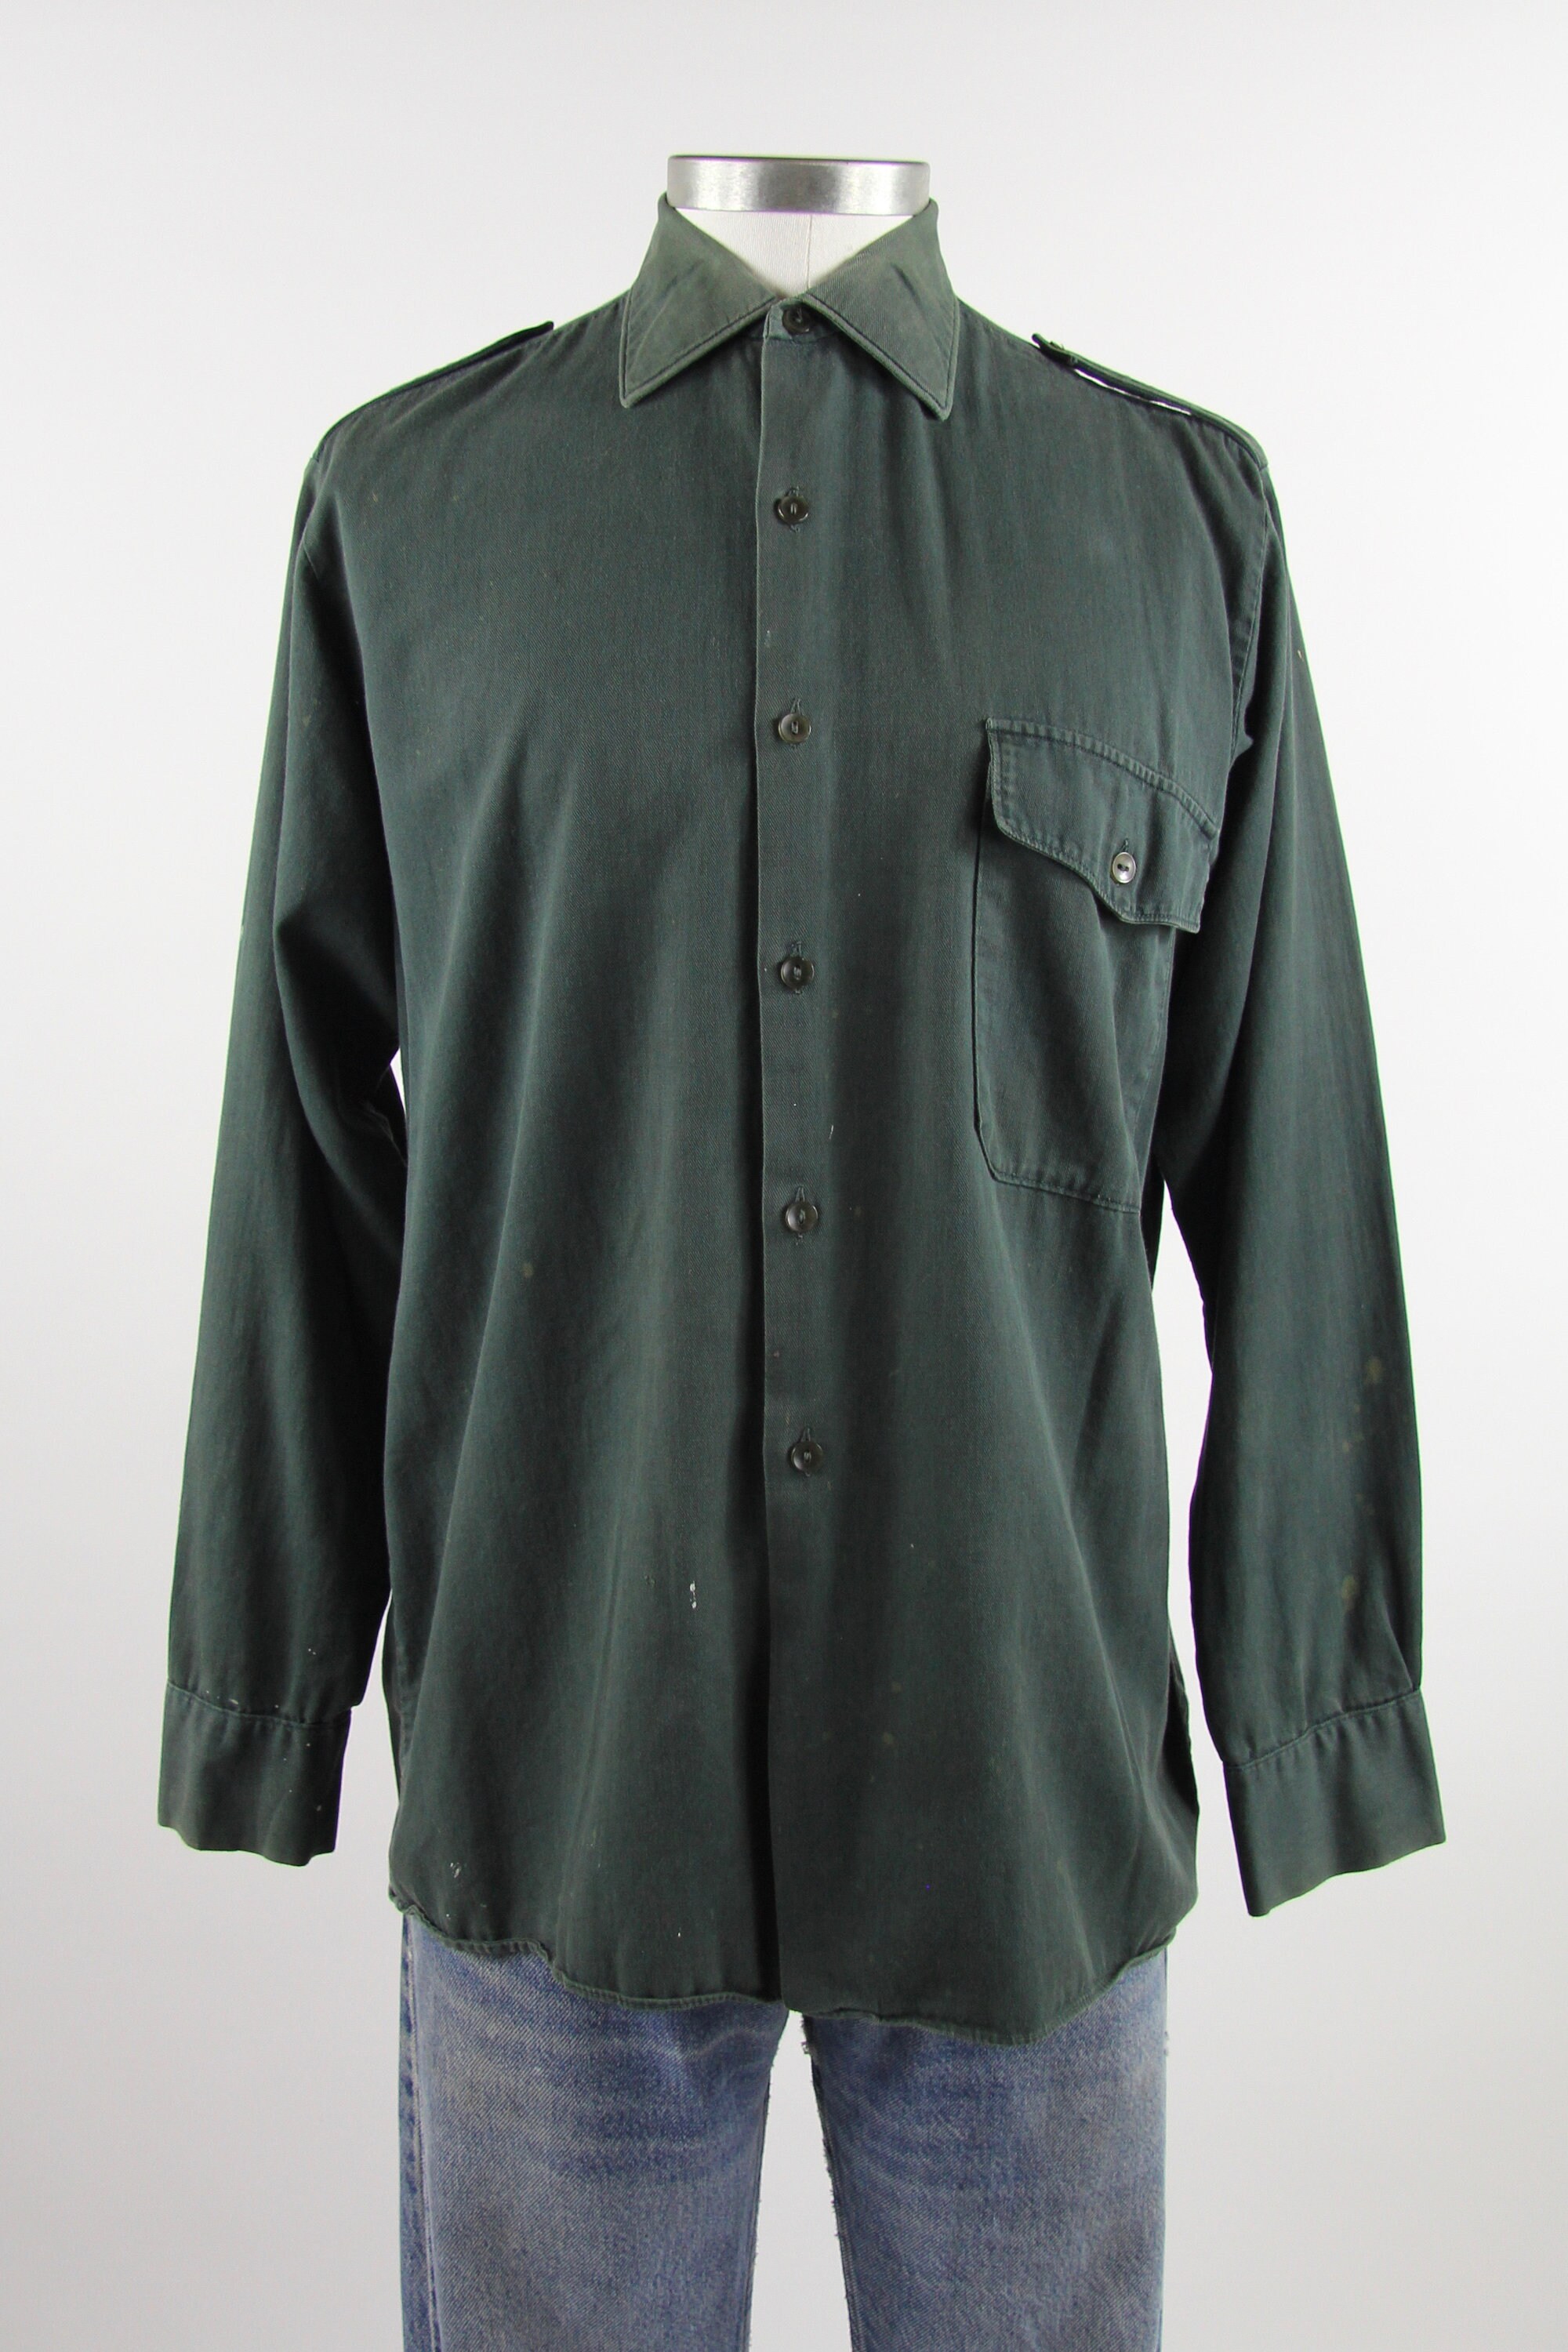 60's Green Work Shirt Men's Vintage Button Down with Epaulettes Size Medium